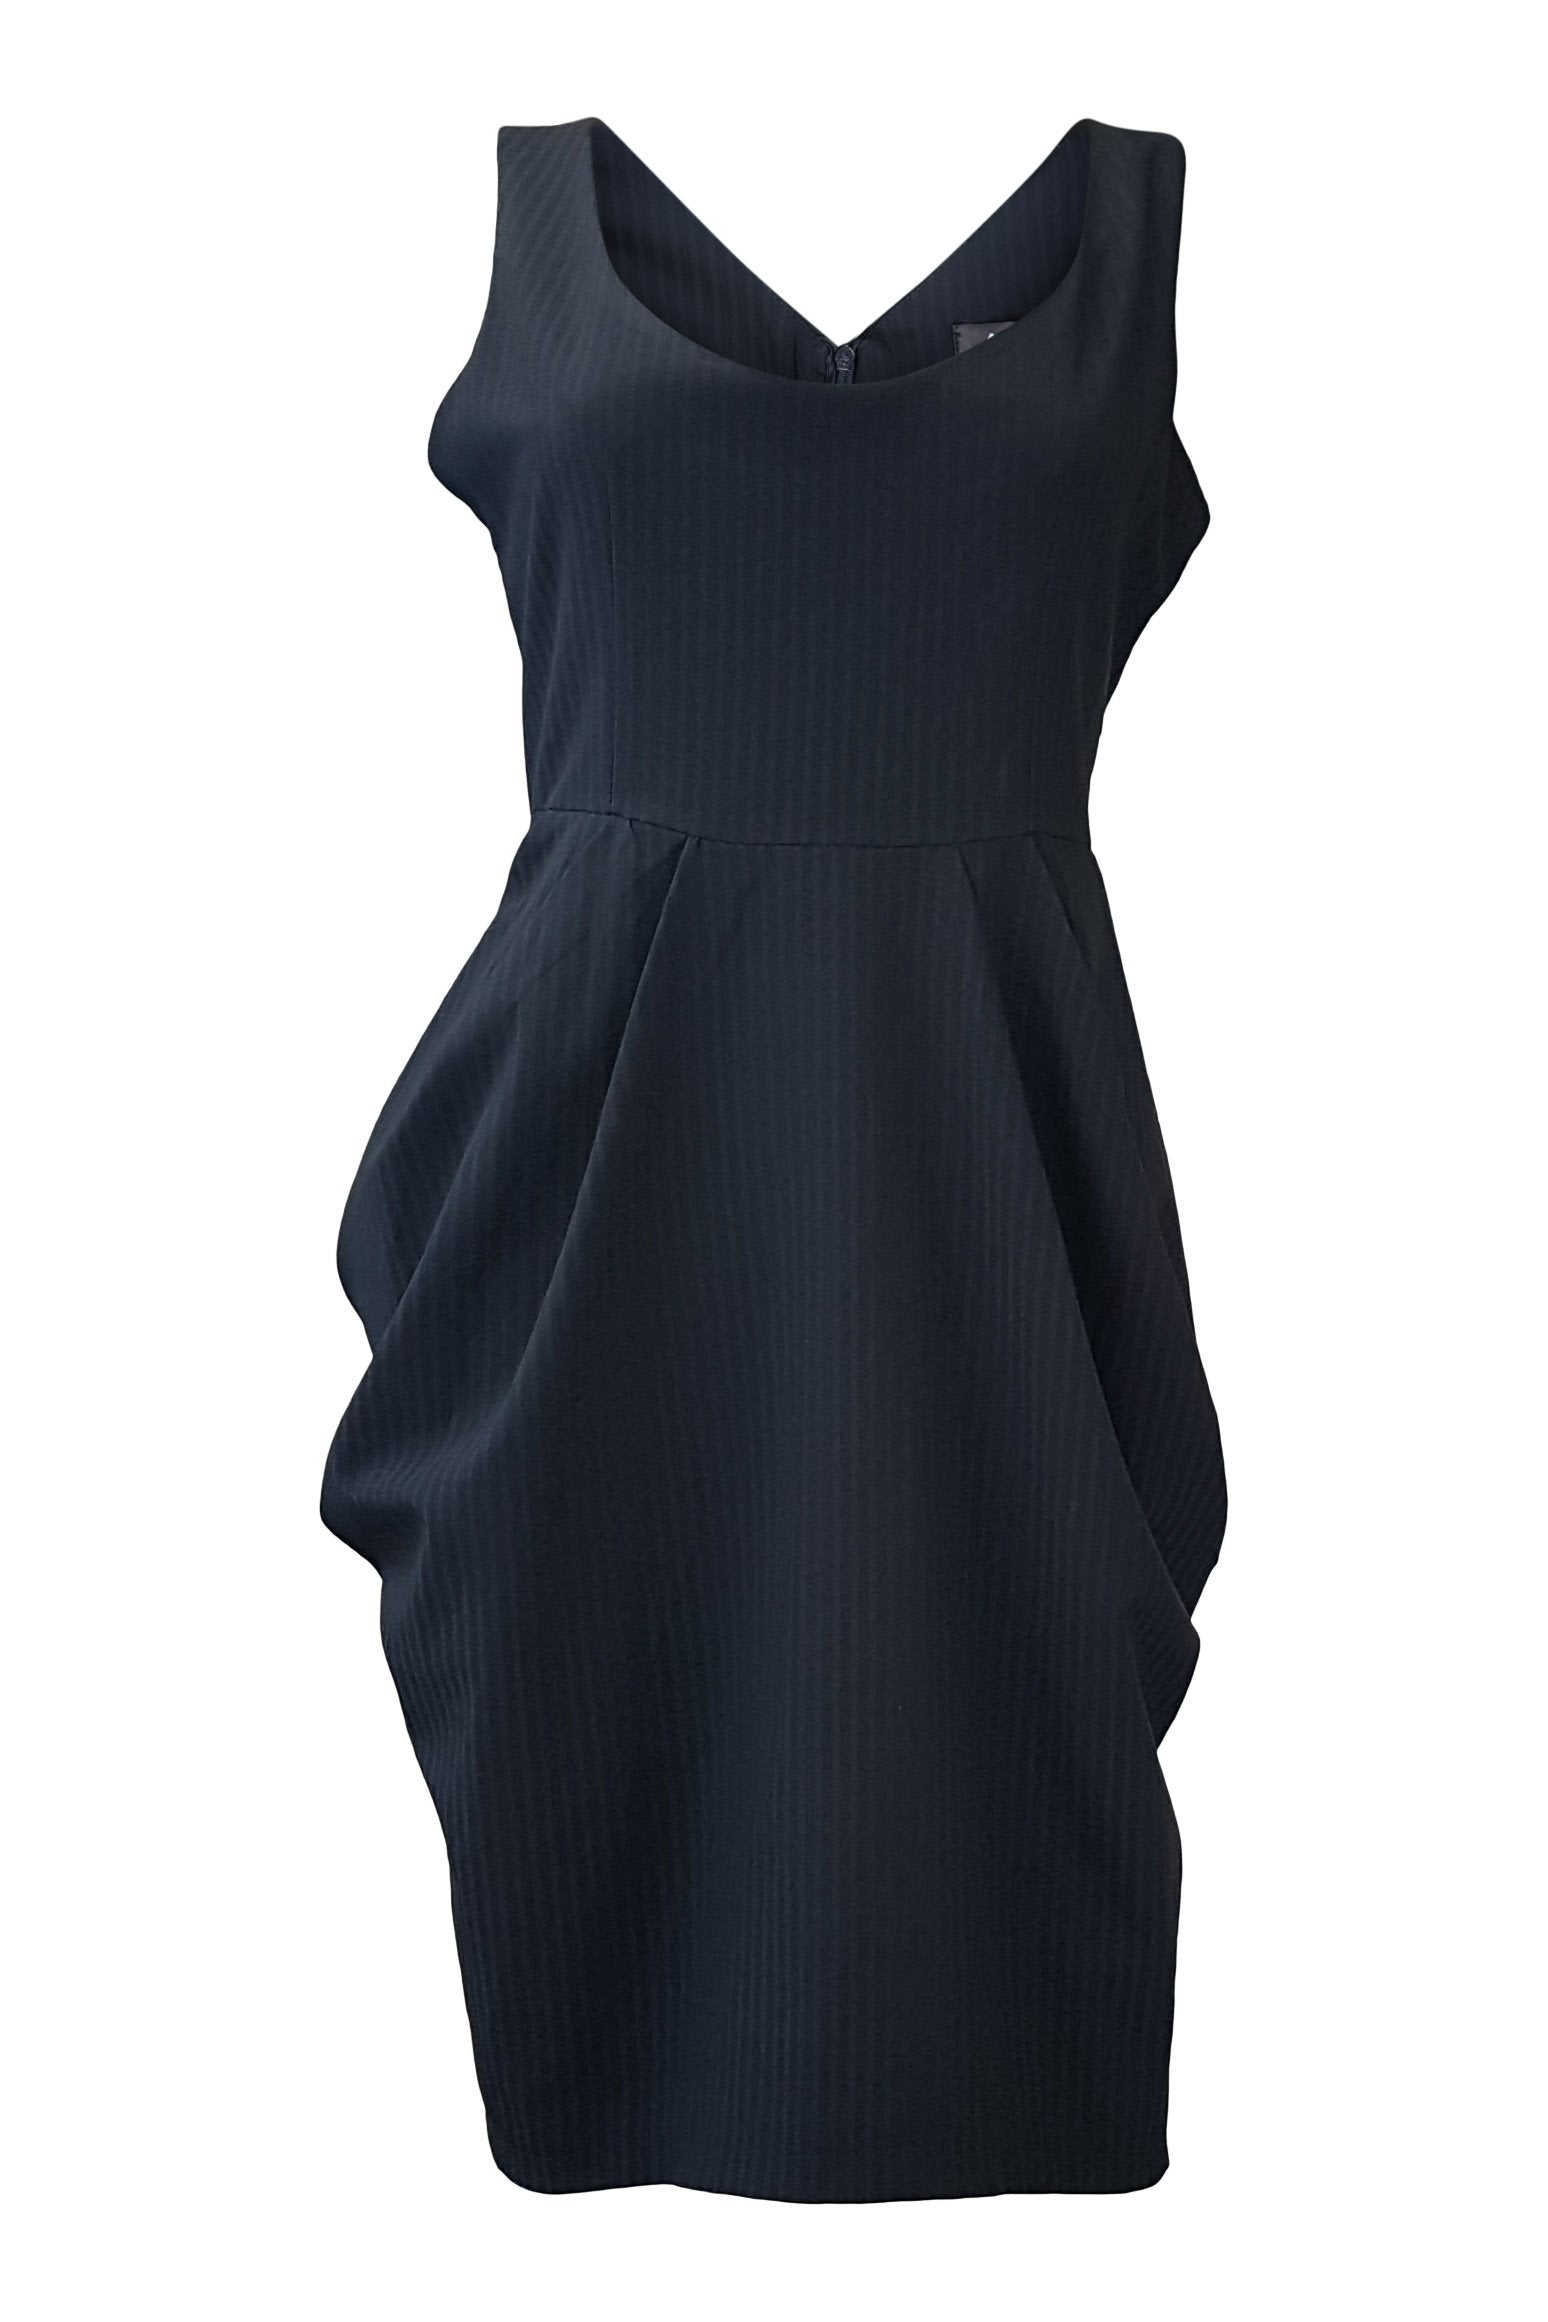 AD LIB Black Pin Stripe Fitted Dress (UK 12)-Ad Lib-The Freperie